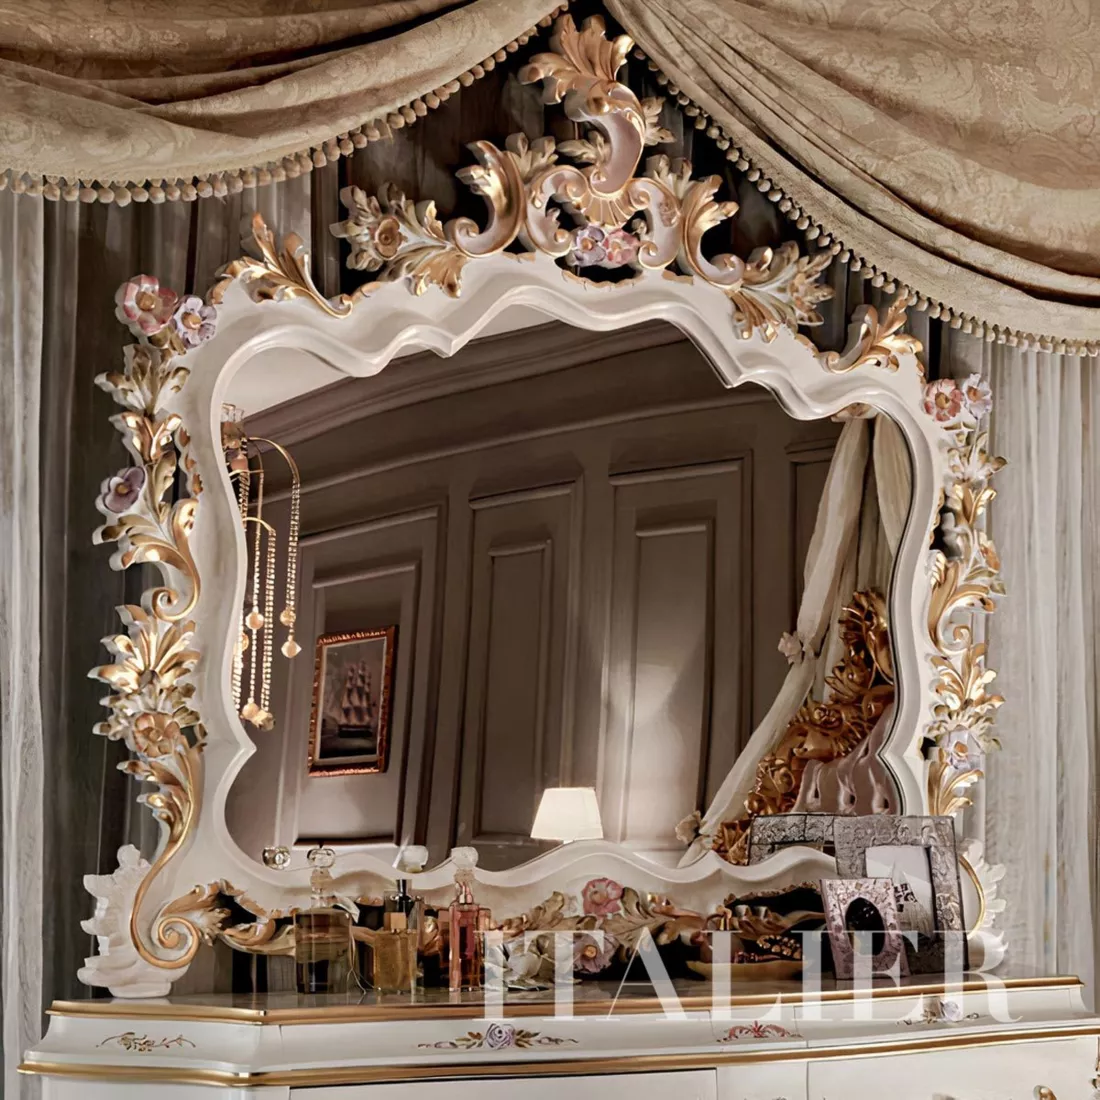 Figured-mirror-hardwood-dresser-painting-Villa-Venezia-collection-Modenese-Gastone_auto_x2